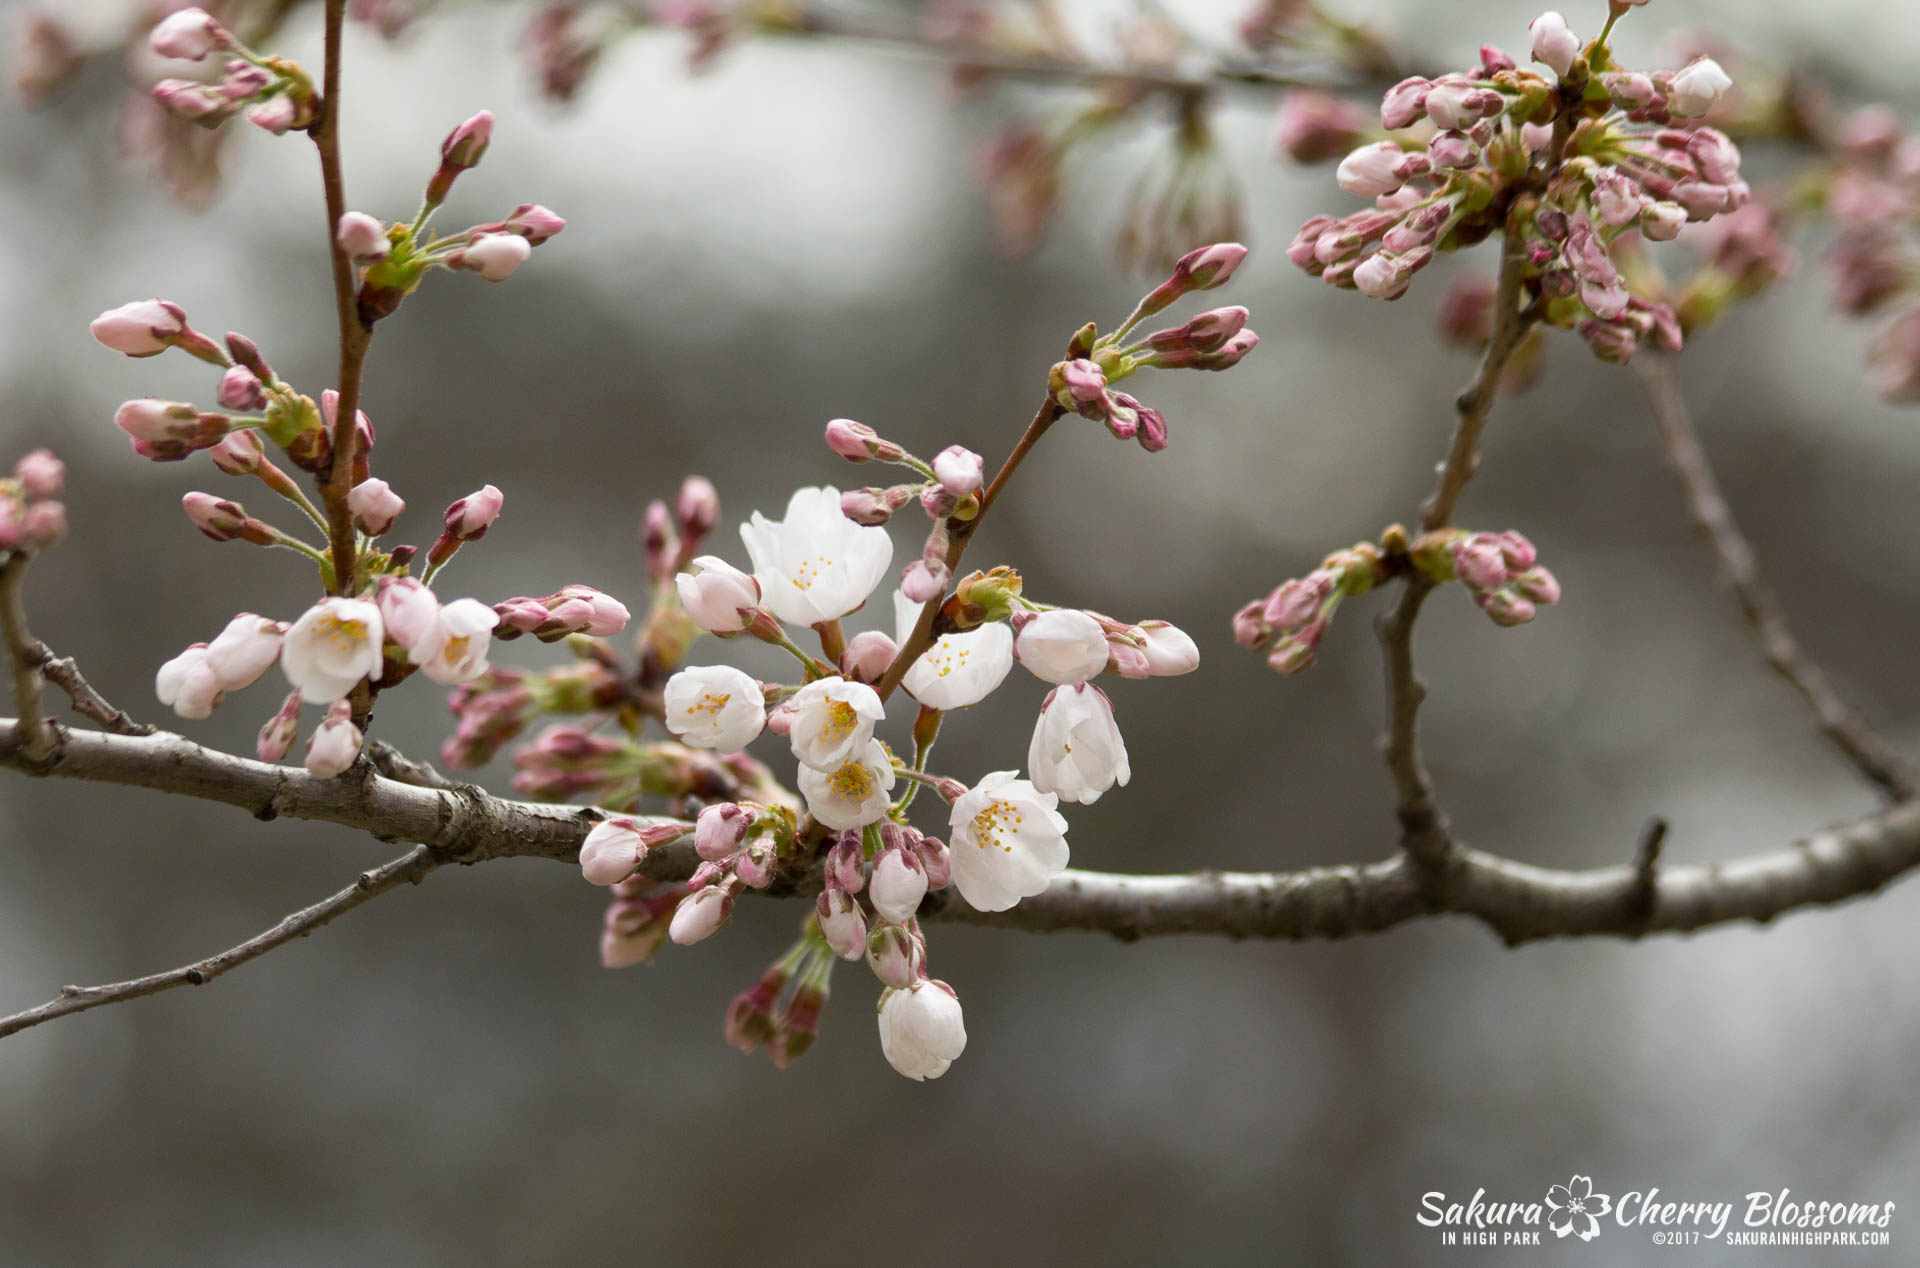 Sakura-Watch-April-21-2017-bloom-still-in-early-stages-81.jpg